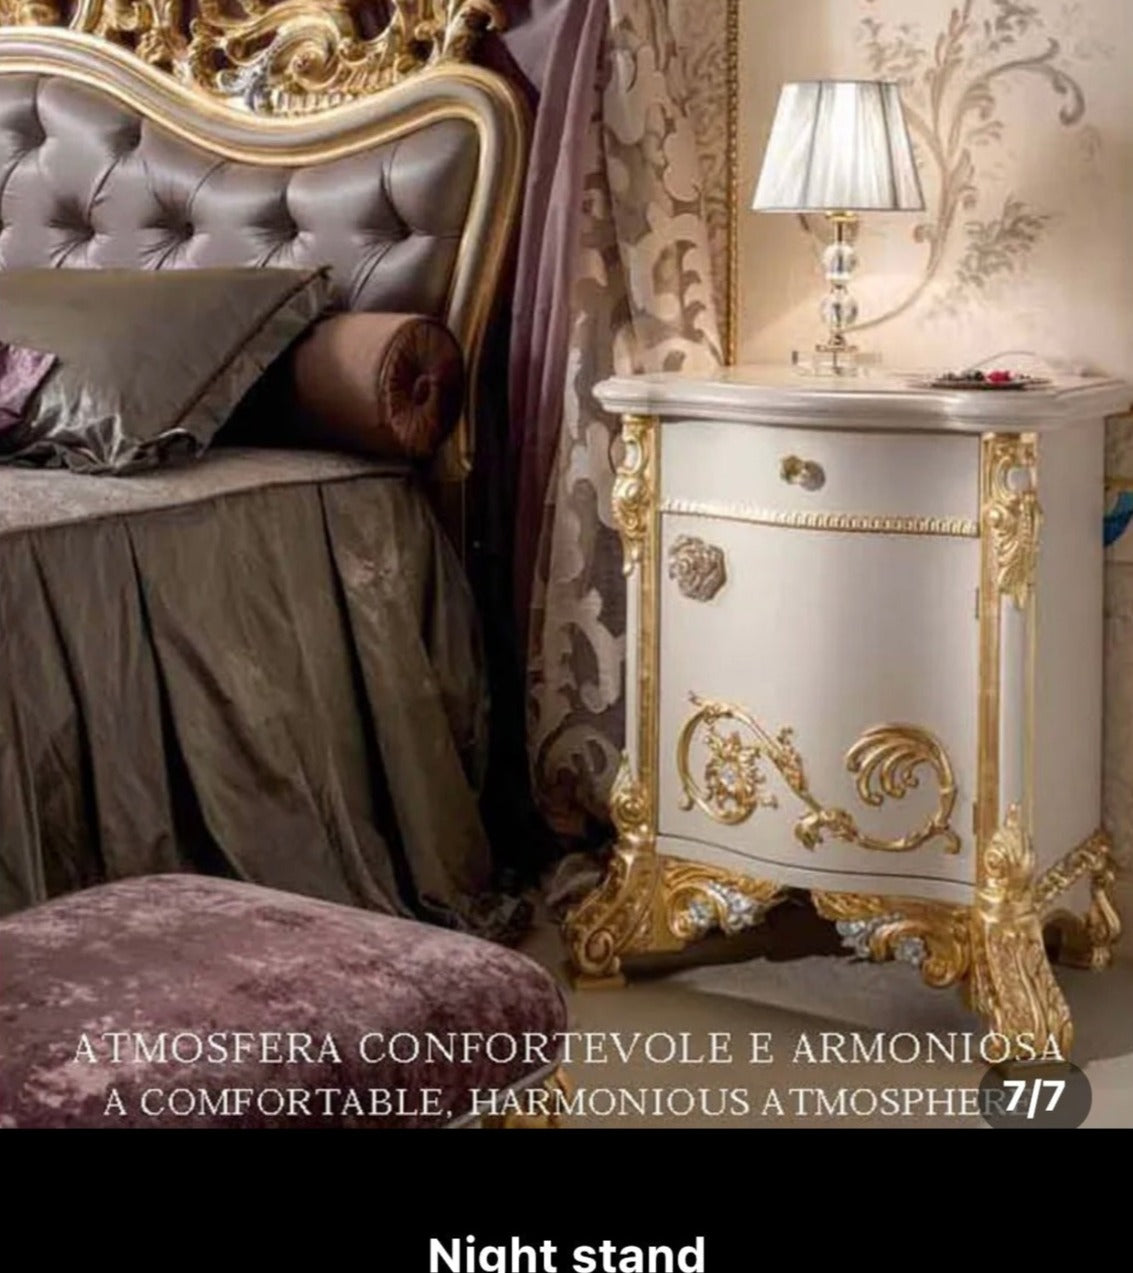 Master Bedroom French Royal Luxury Heavy Carved Bedroom Set Golden Solid Wood Baroque Design Furniture